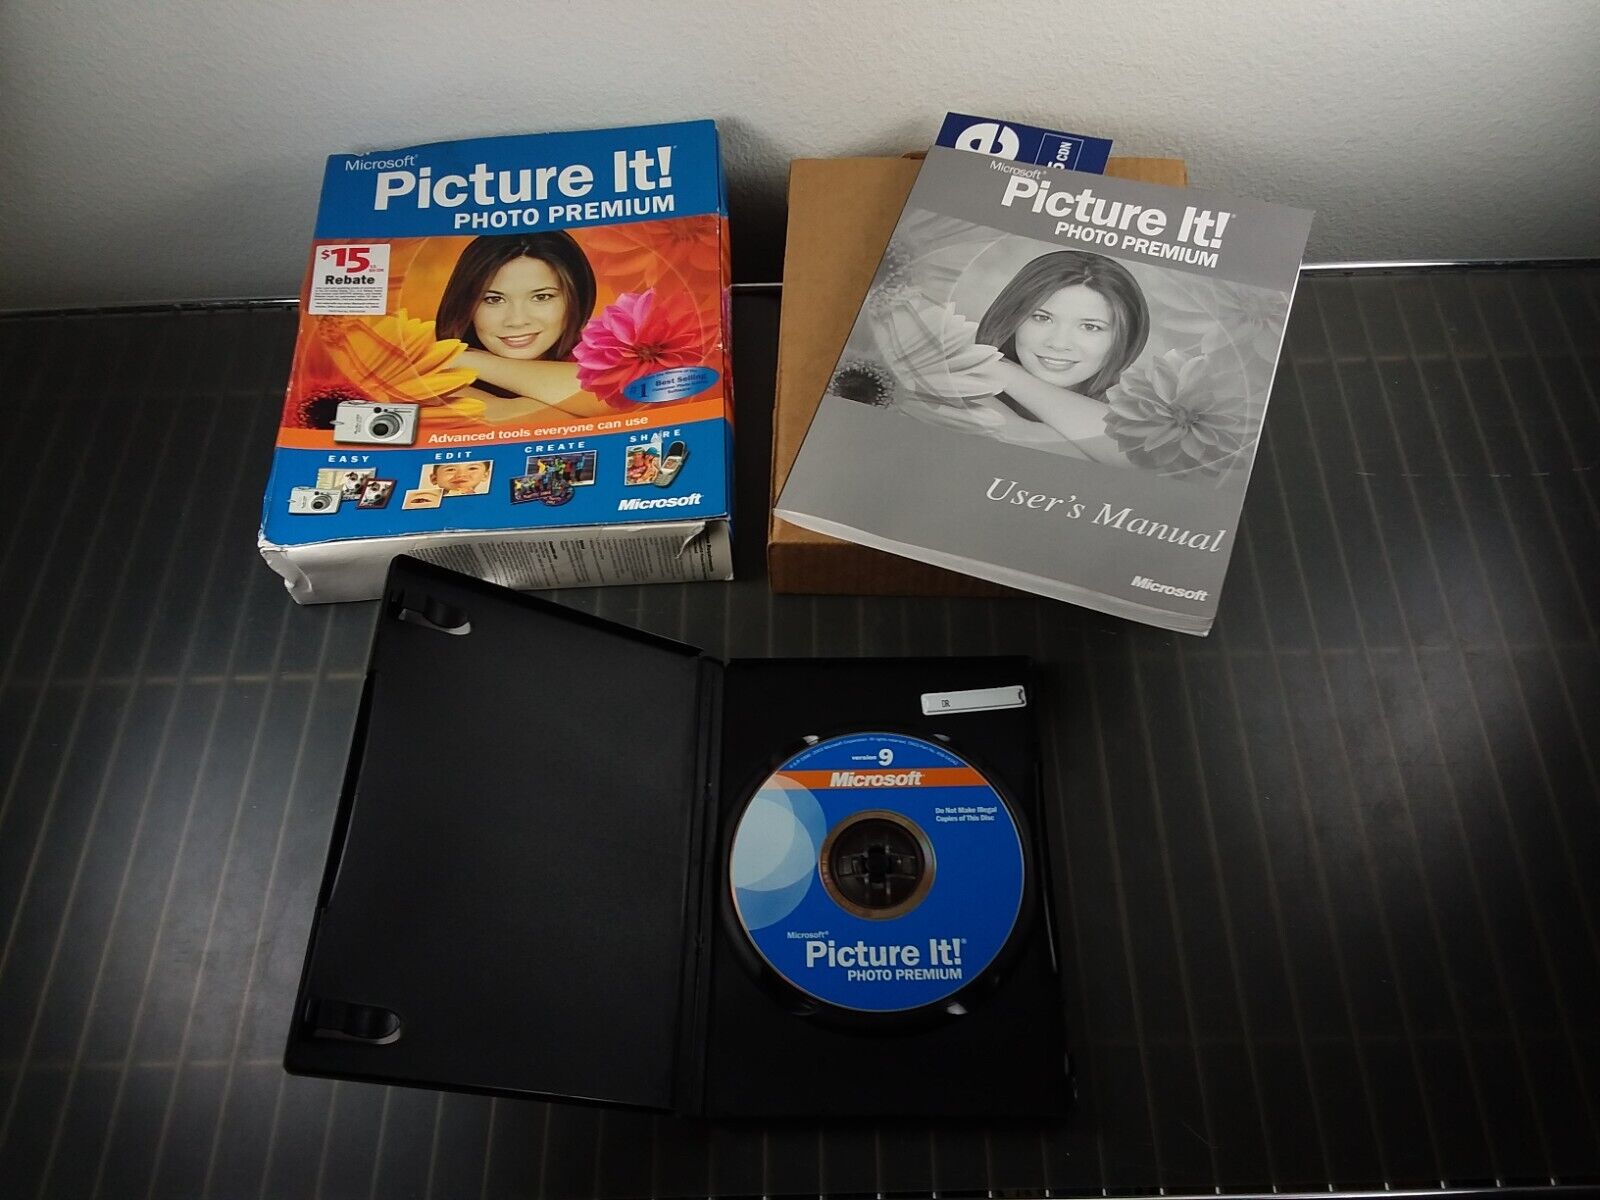 Microsoft Picture It Photo Premium Version 9.0 CD